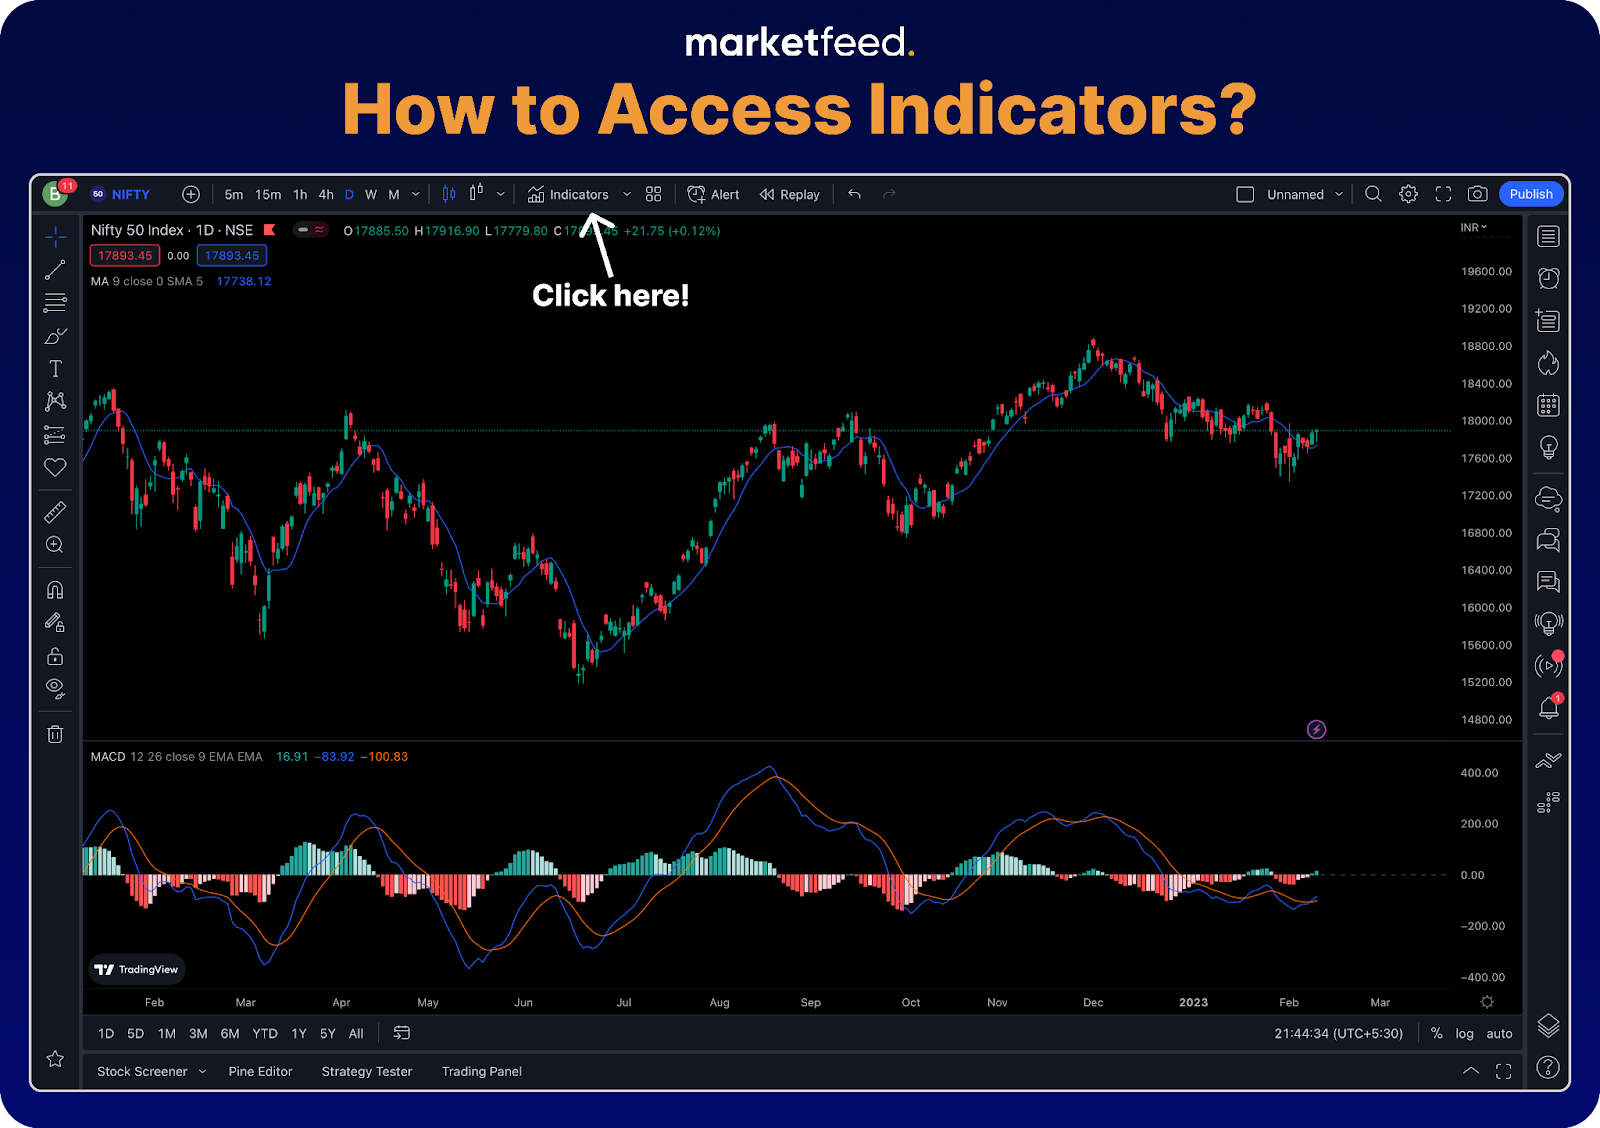 access indicators - technical indicators | marketfeed